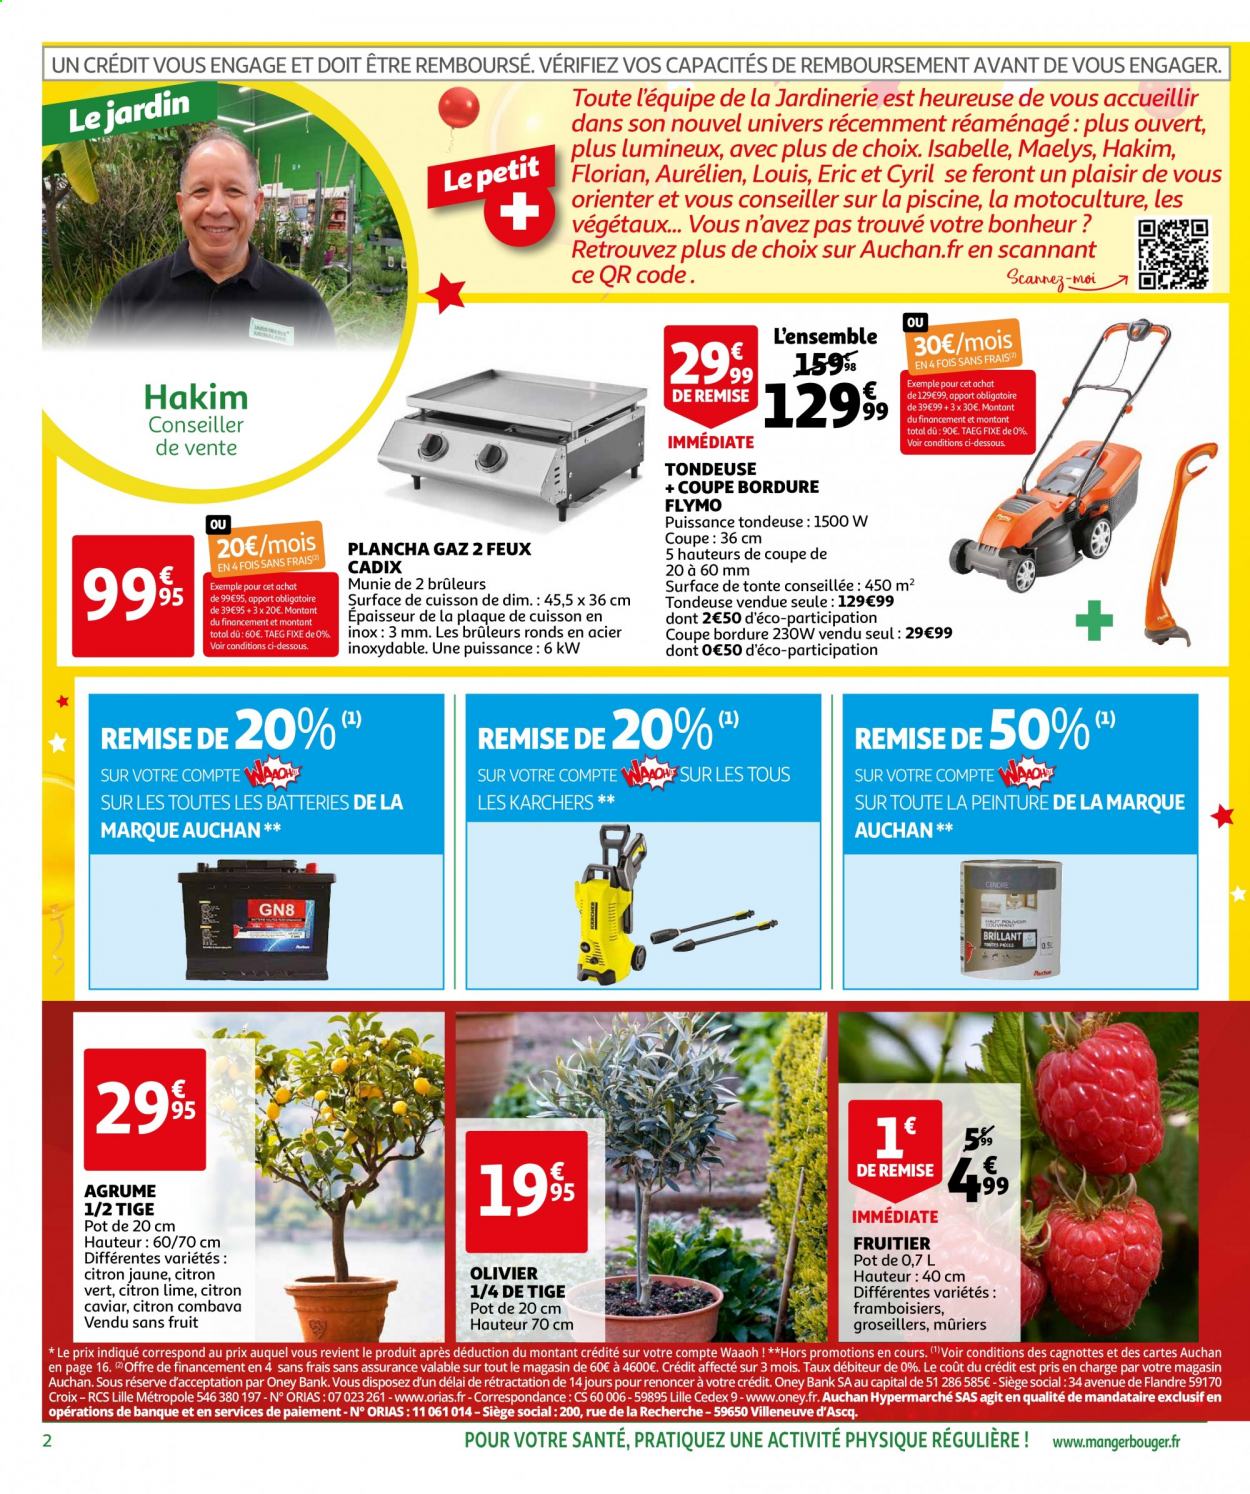 Catalogue Auchan - 16.06.2021 - 22.06.2021. 